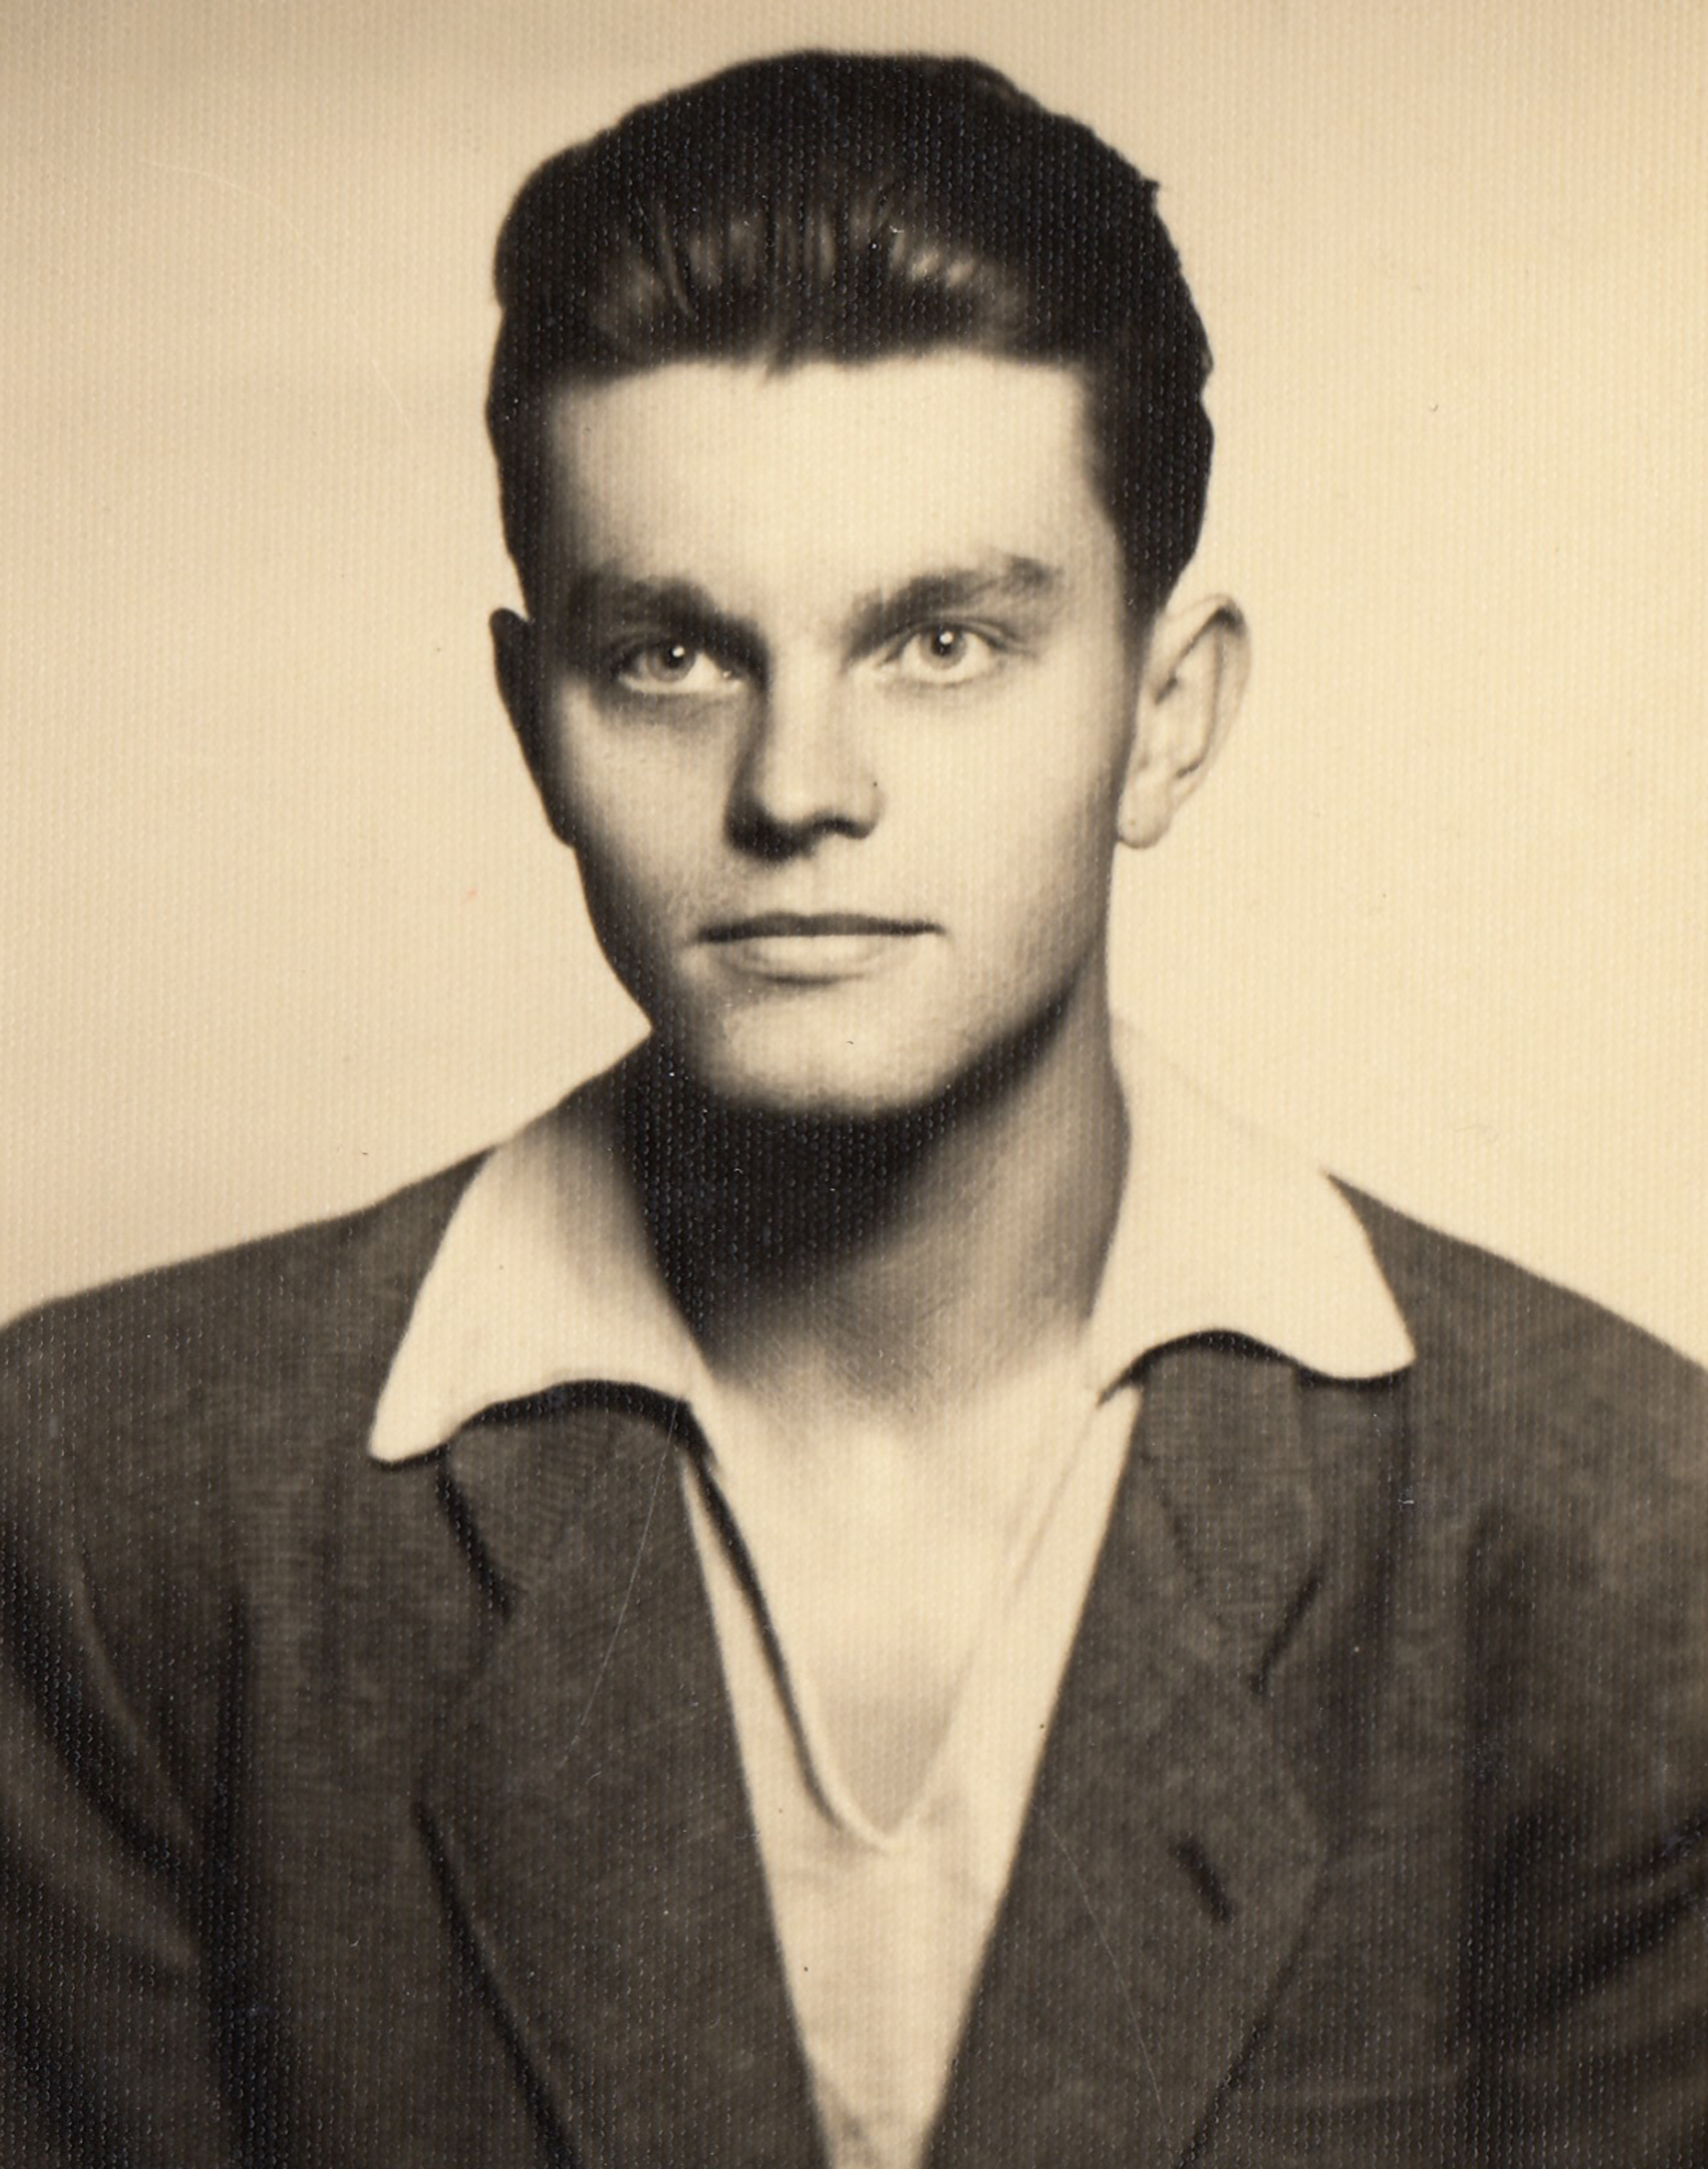 Jan Jeník in his university years - around 1950